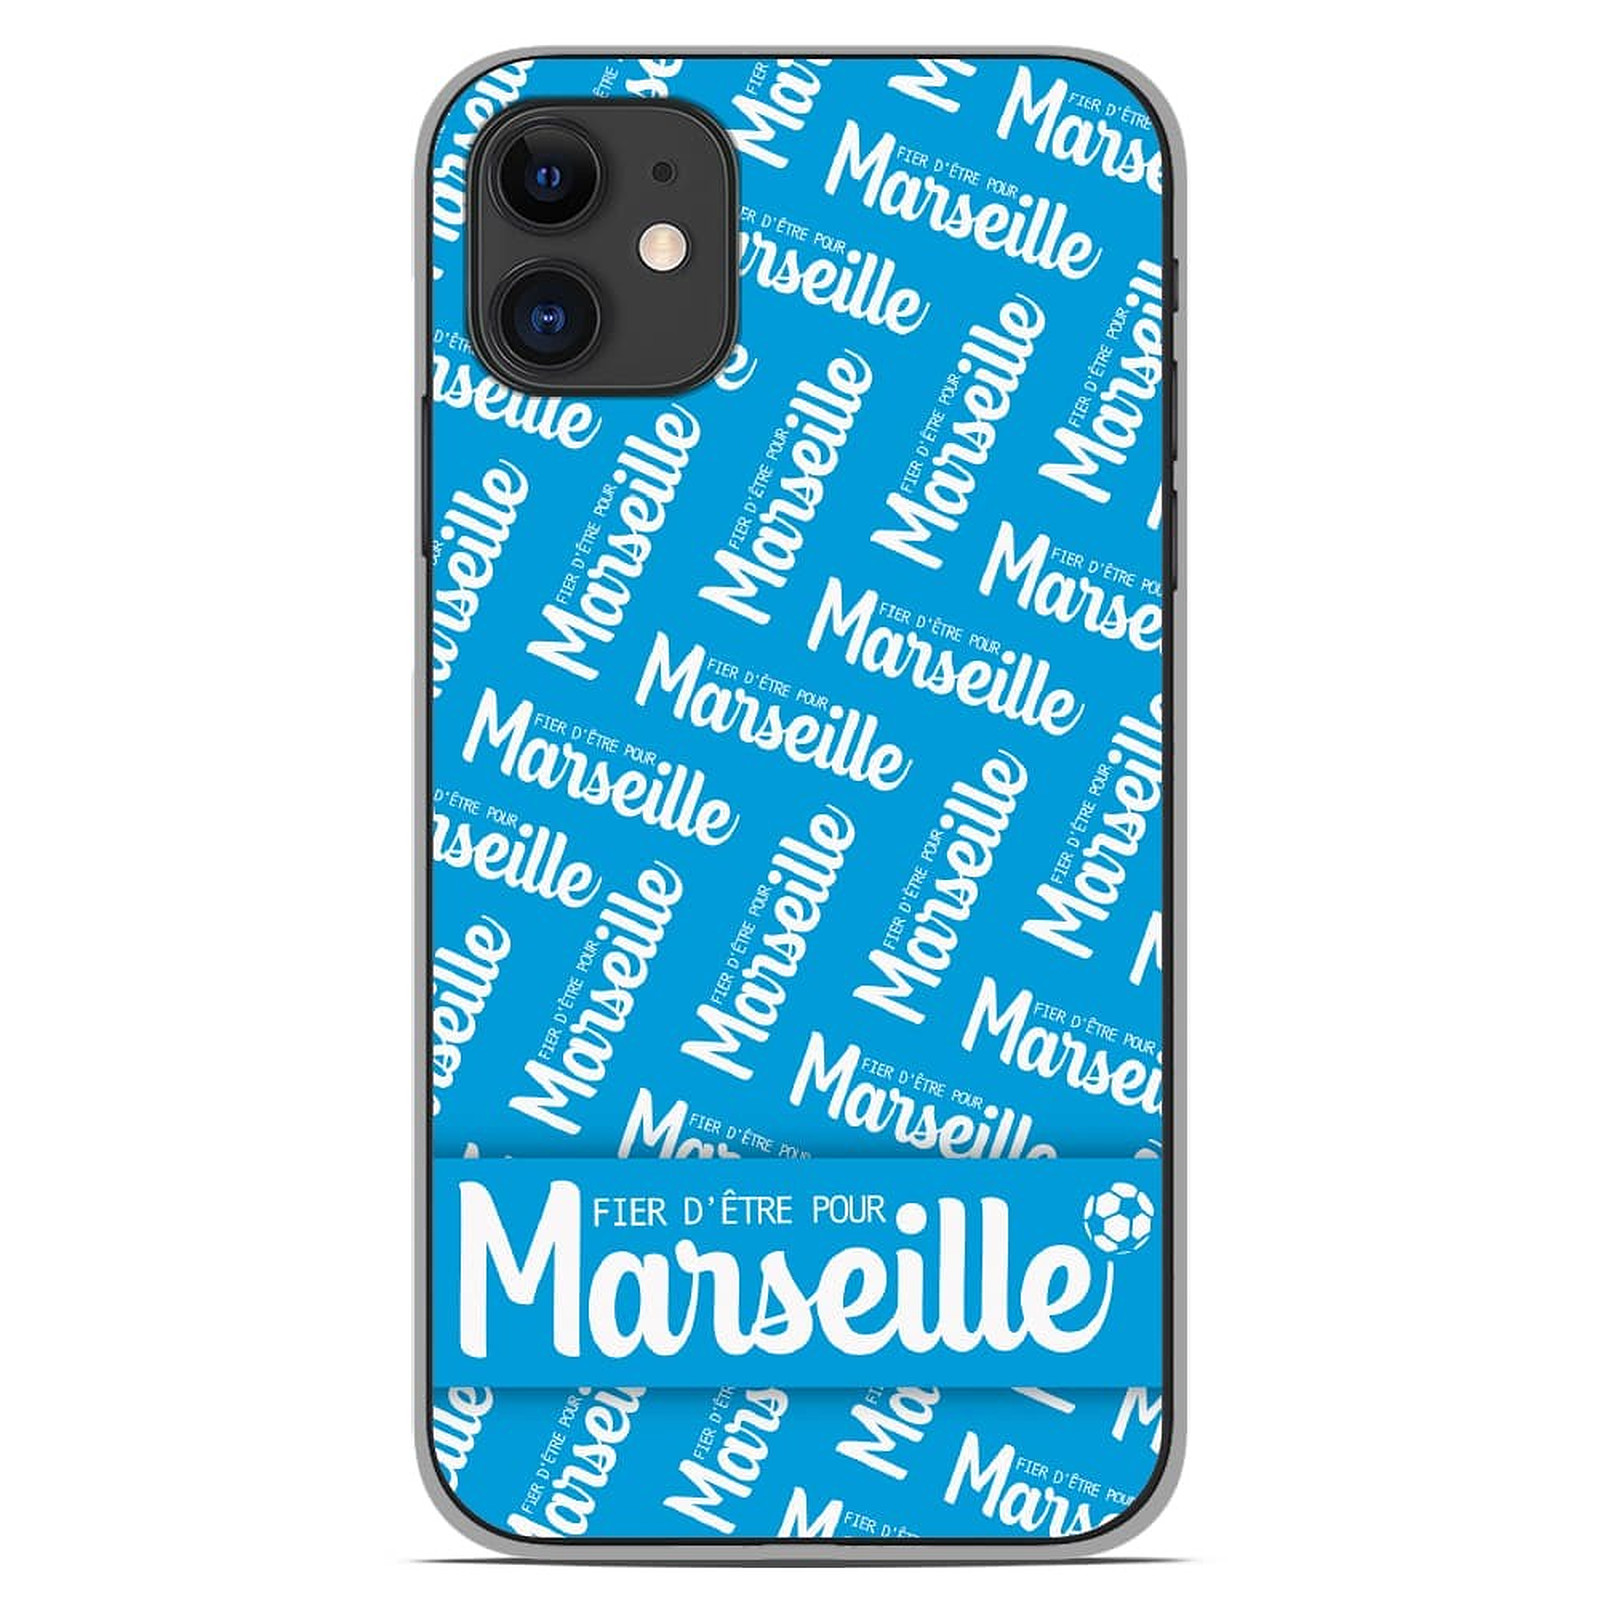 1001 Coques Coque silicone gel Apple iPhone 11 motif Fier d'etre pour Marseille - Coque telephone 1001Coques